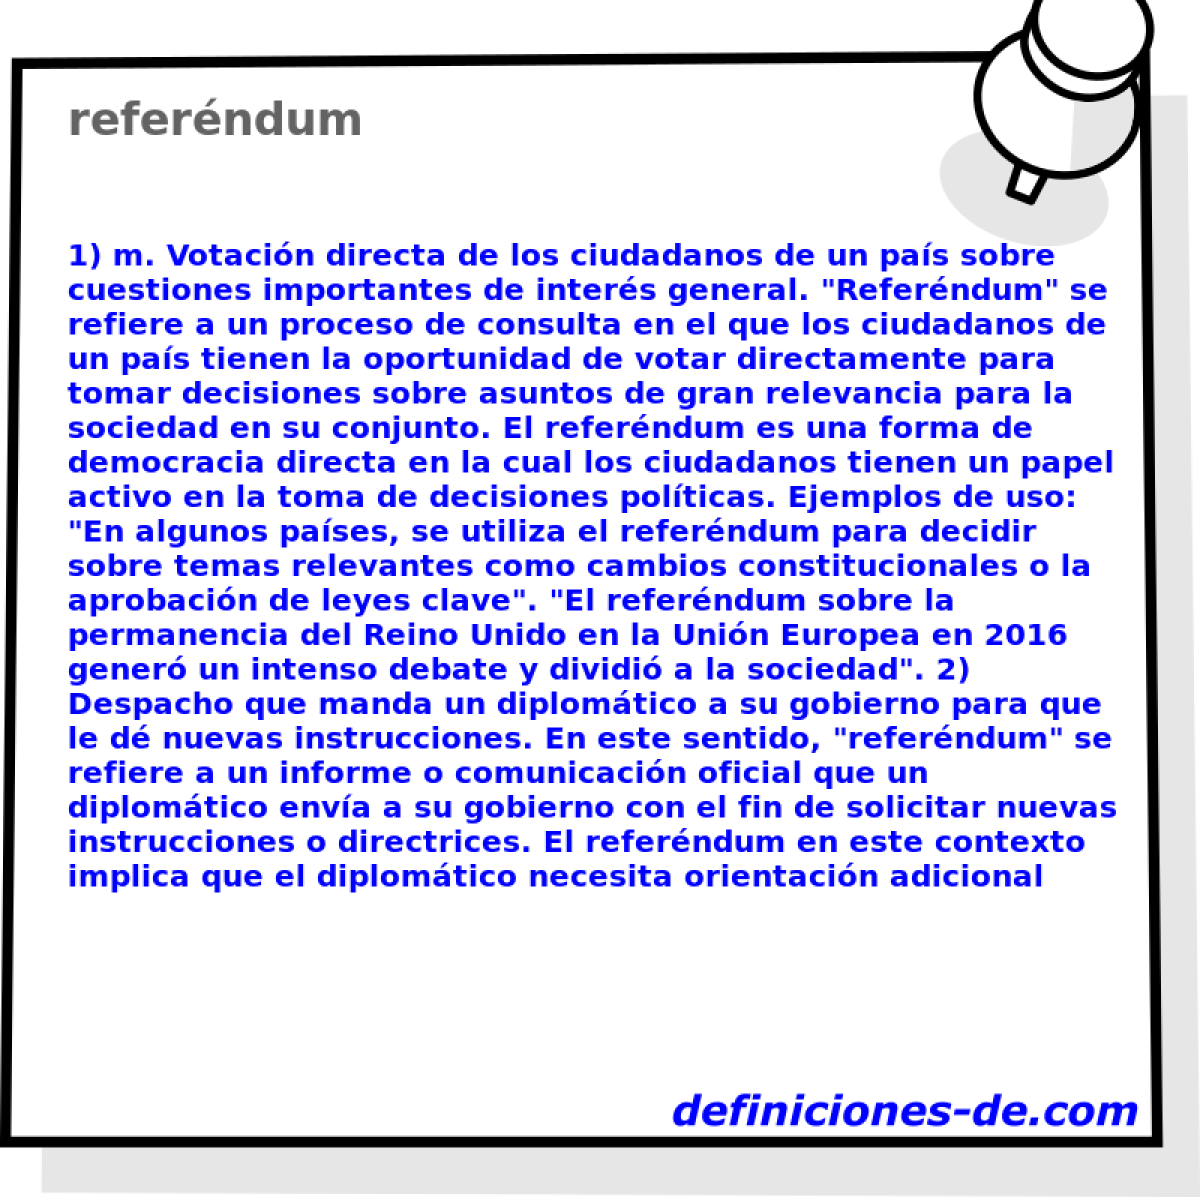 referndum 